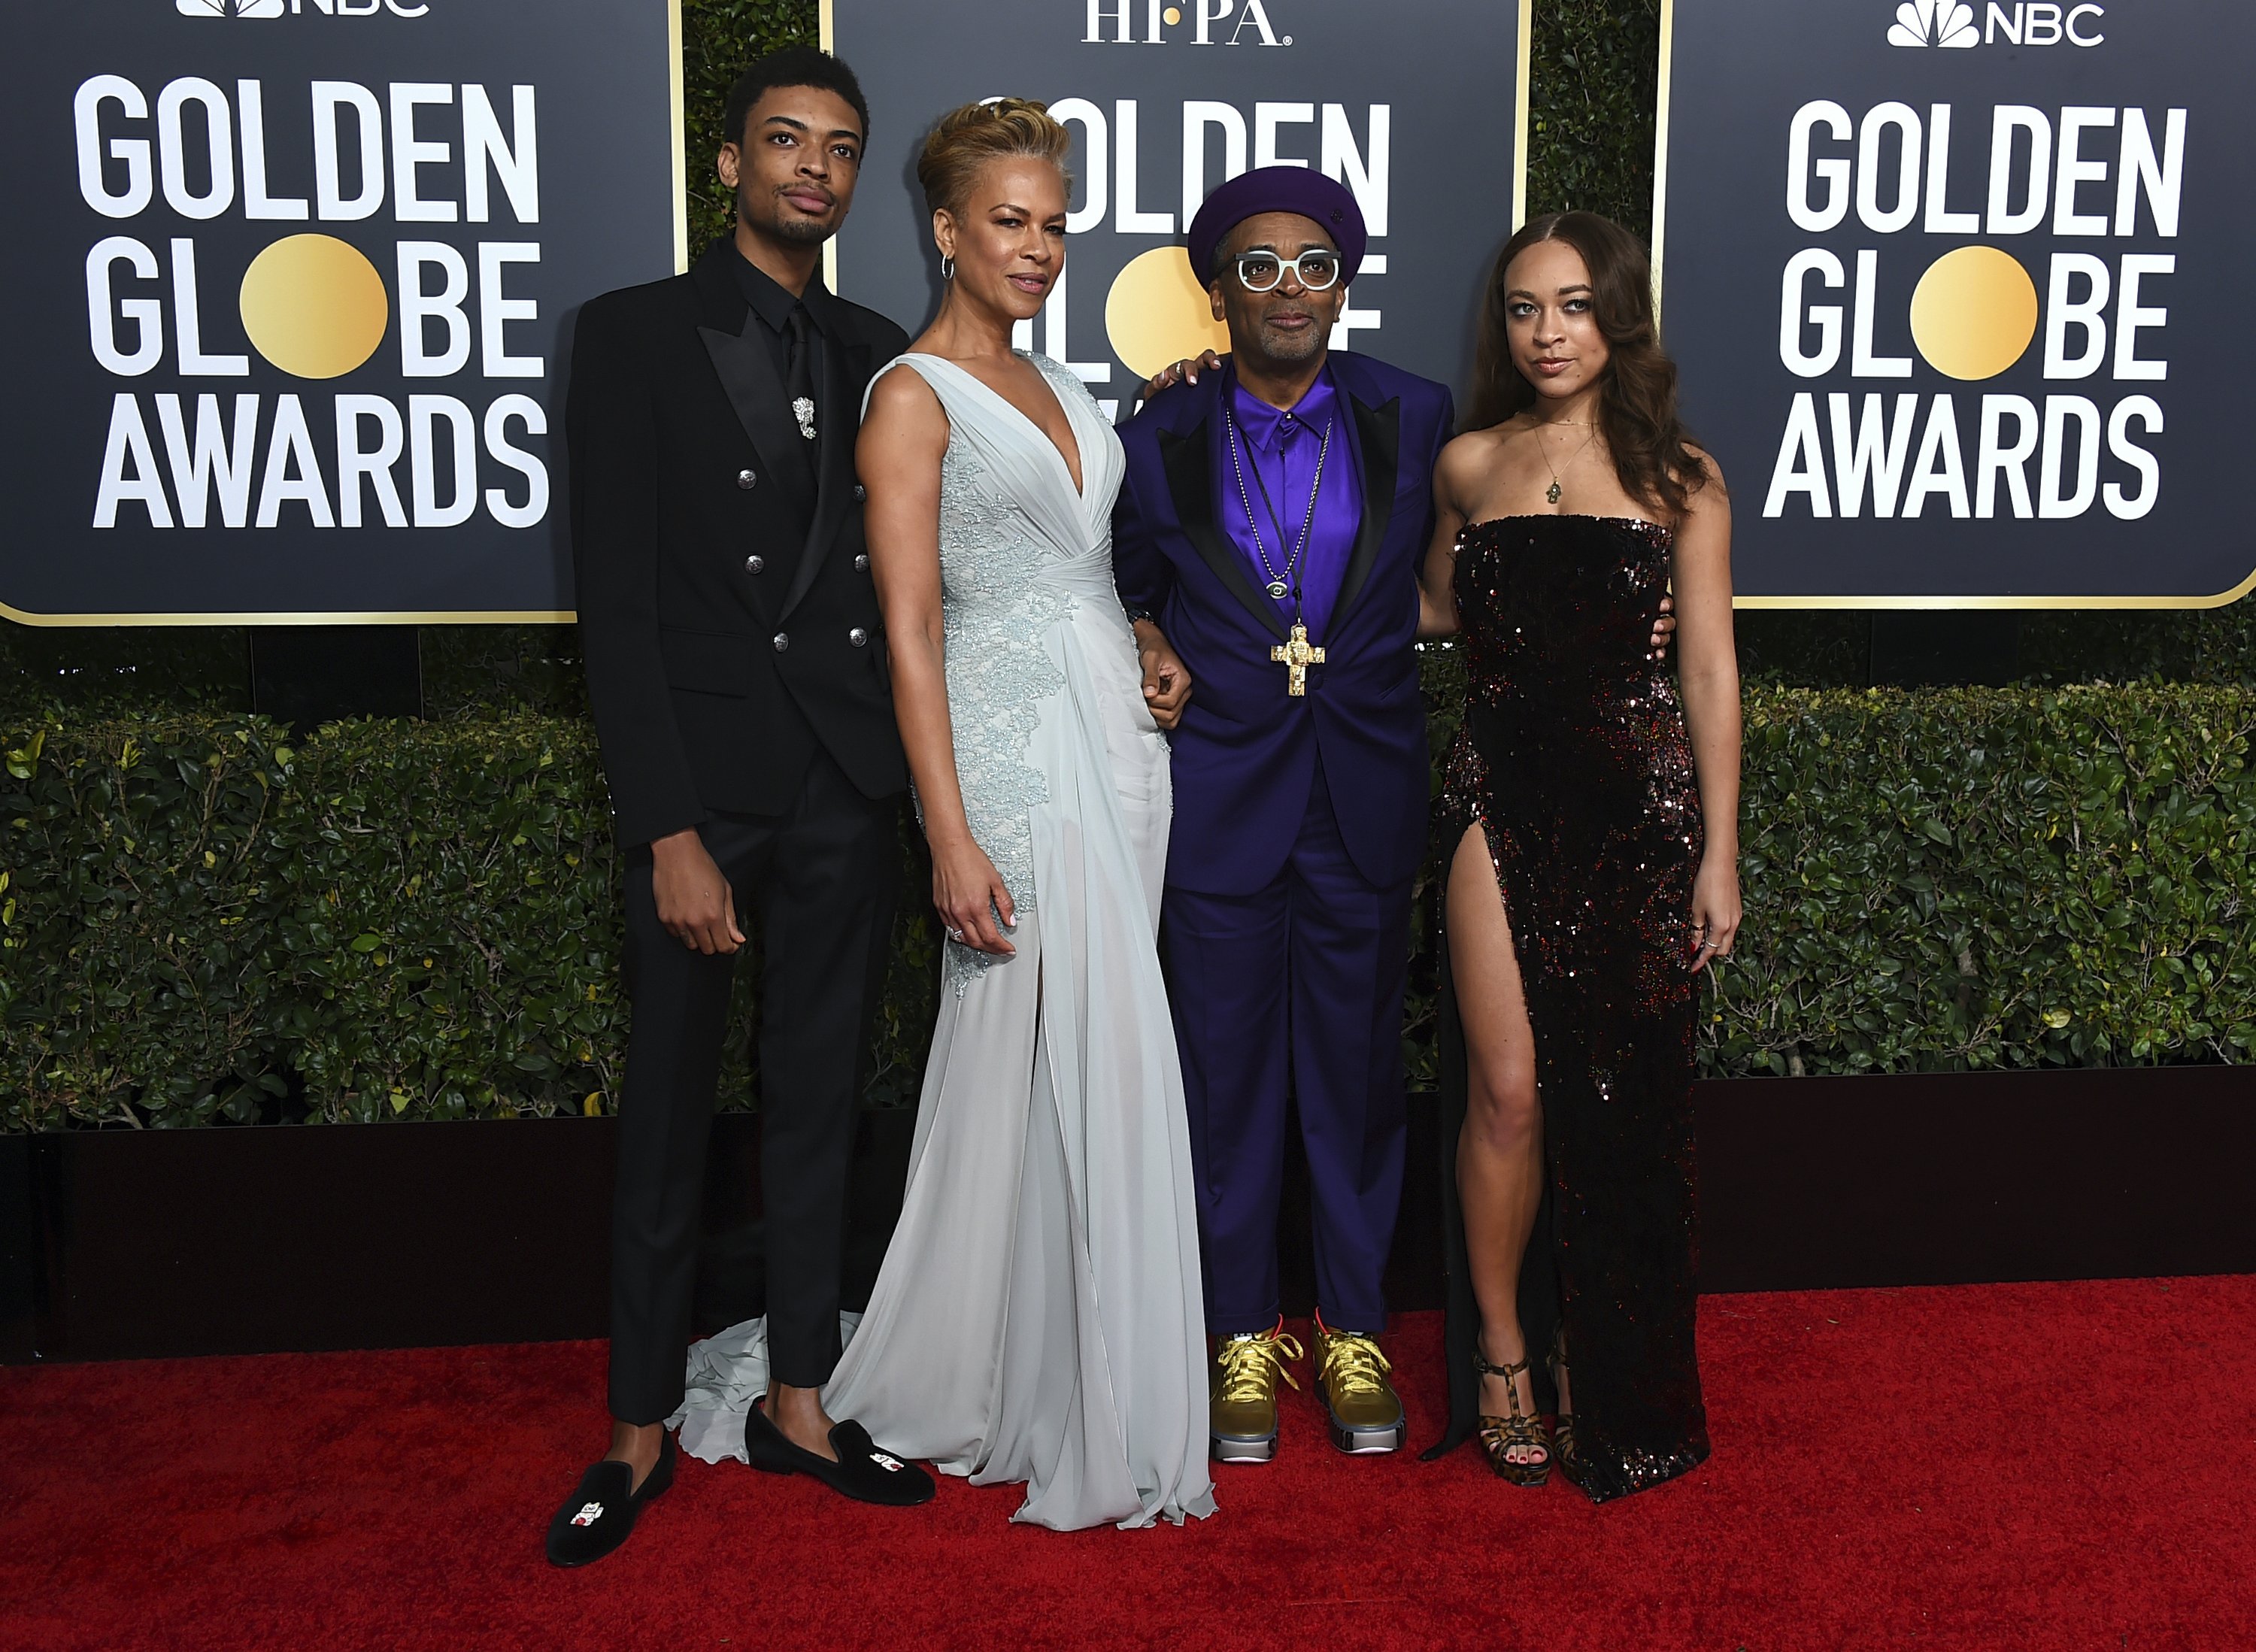 Spike Lee’s children have been named ambassadors of the Golden Globe